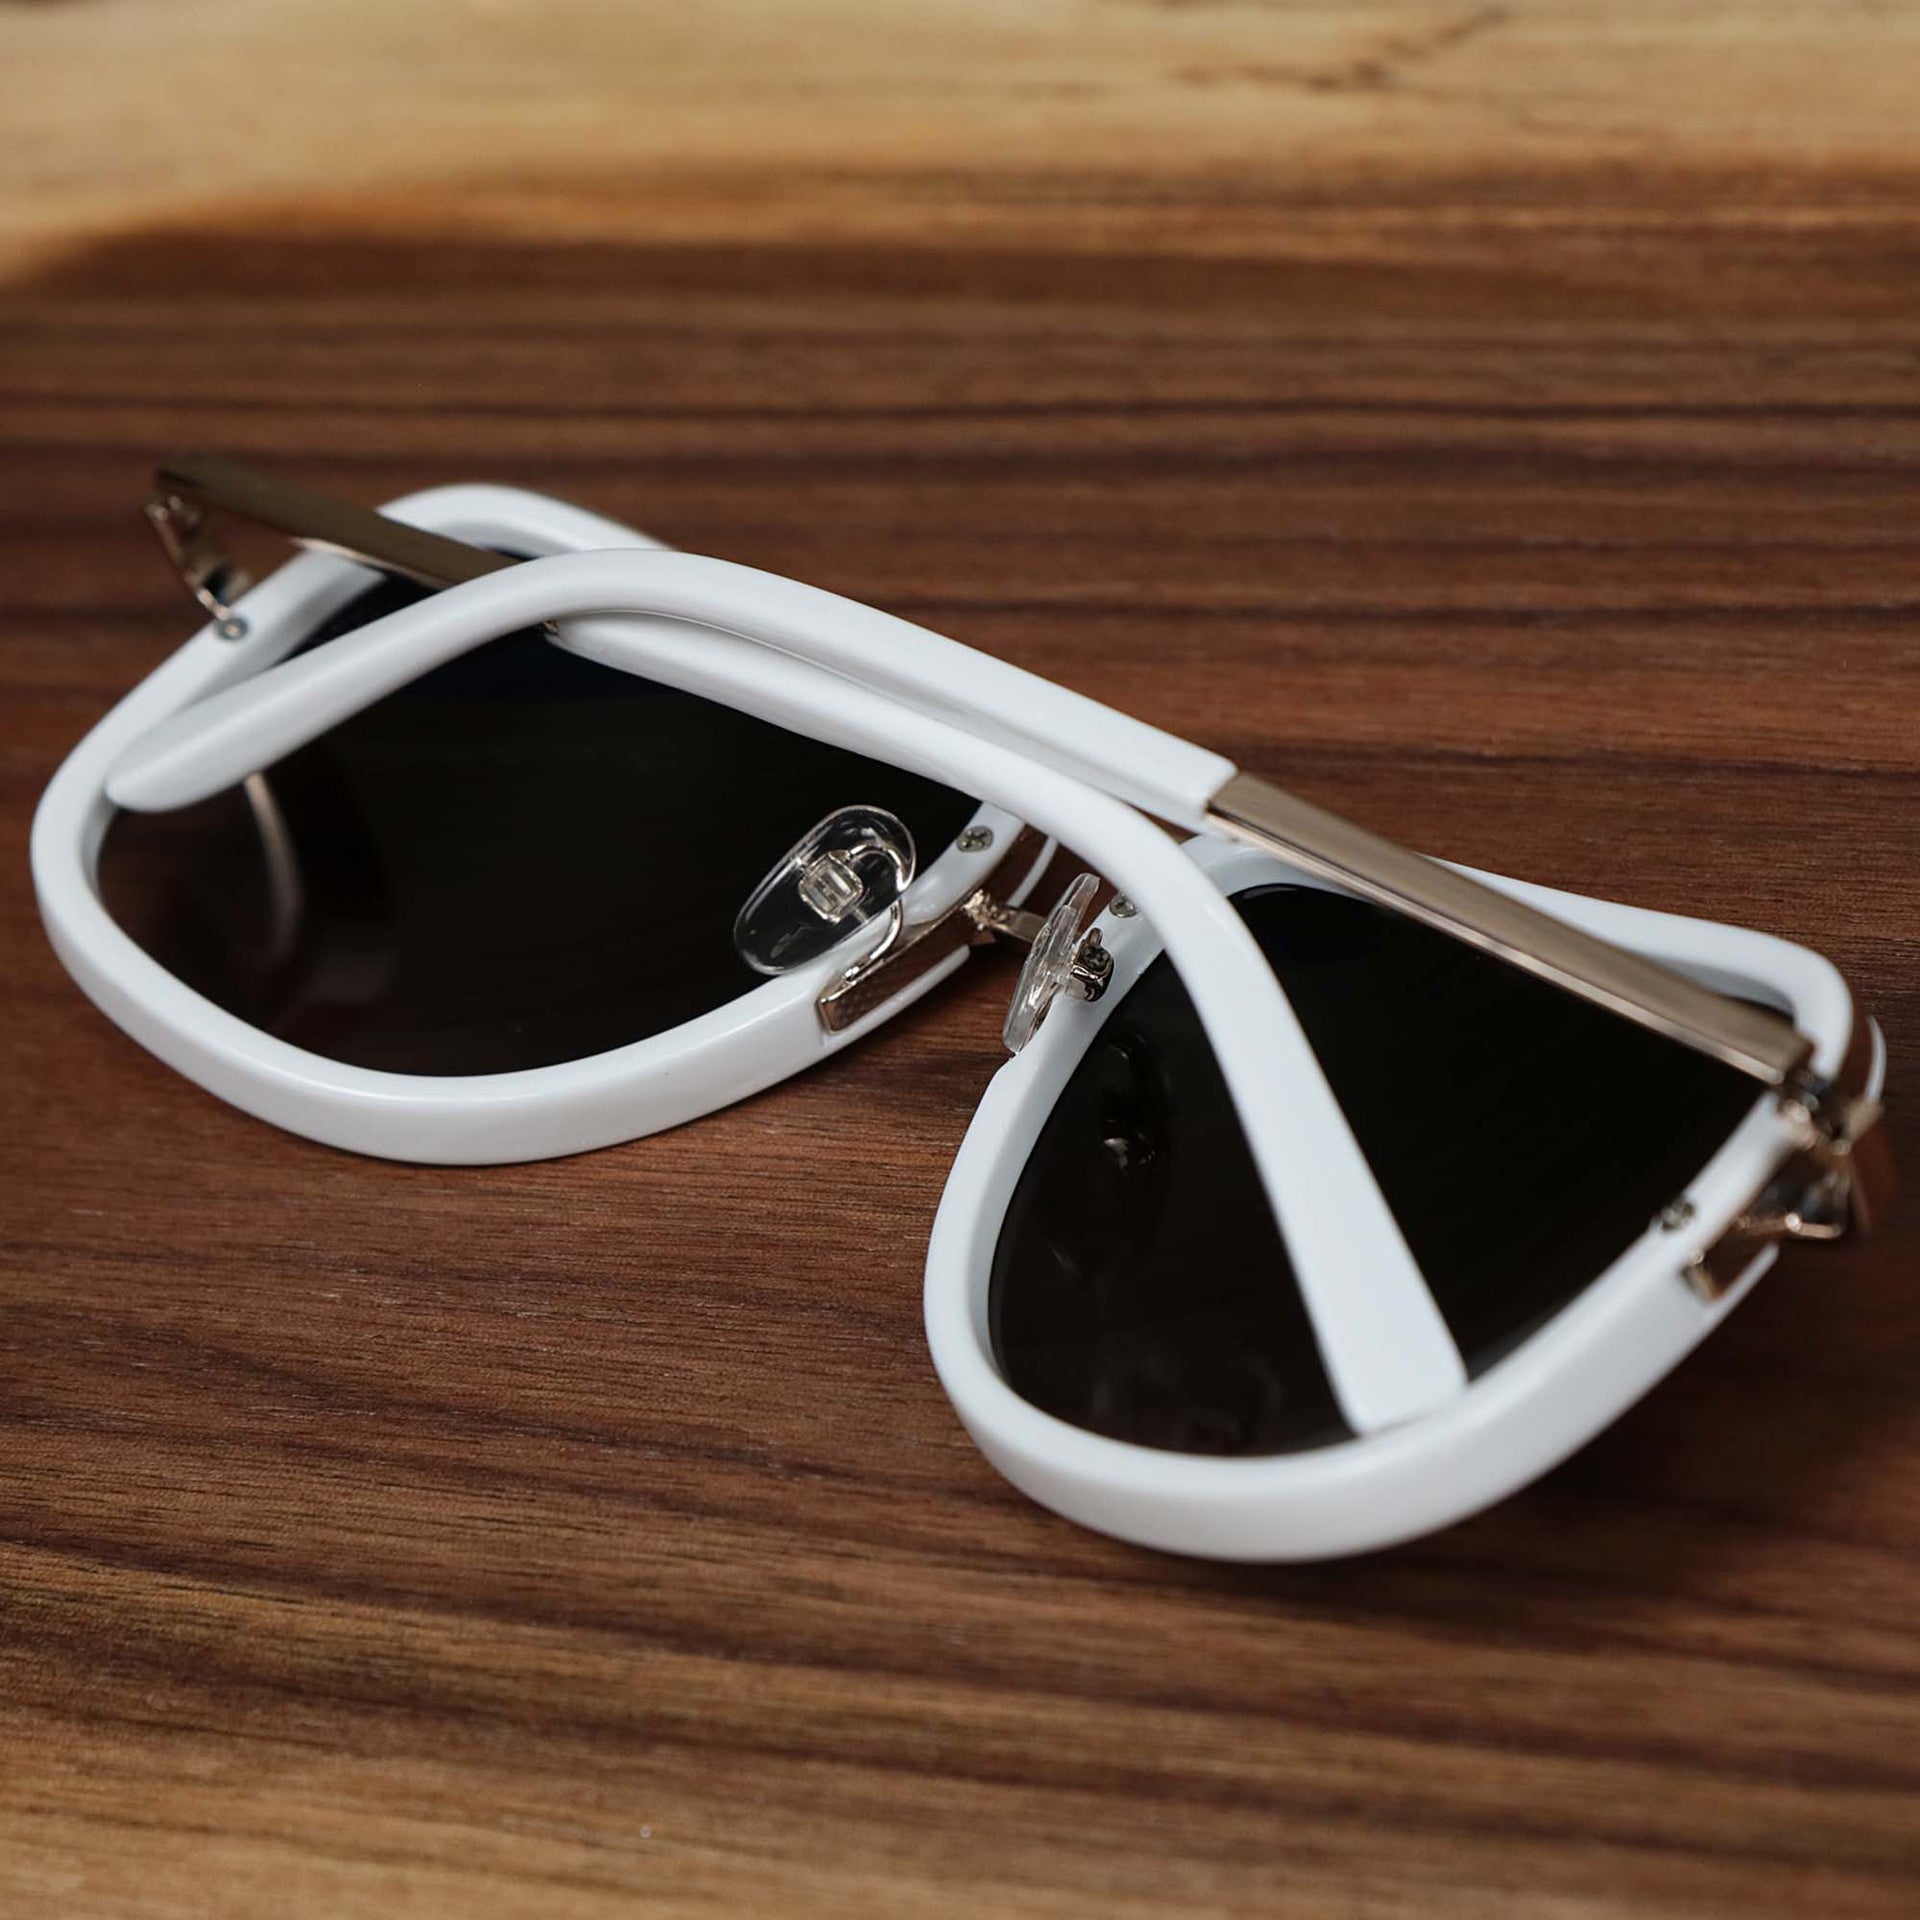 The Round Frame Black Lens Luxury Sunglasses with White Gold Frame folded u[